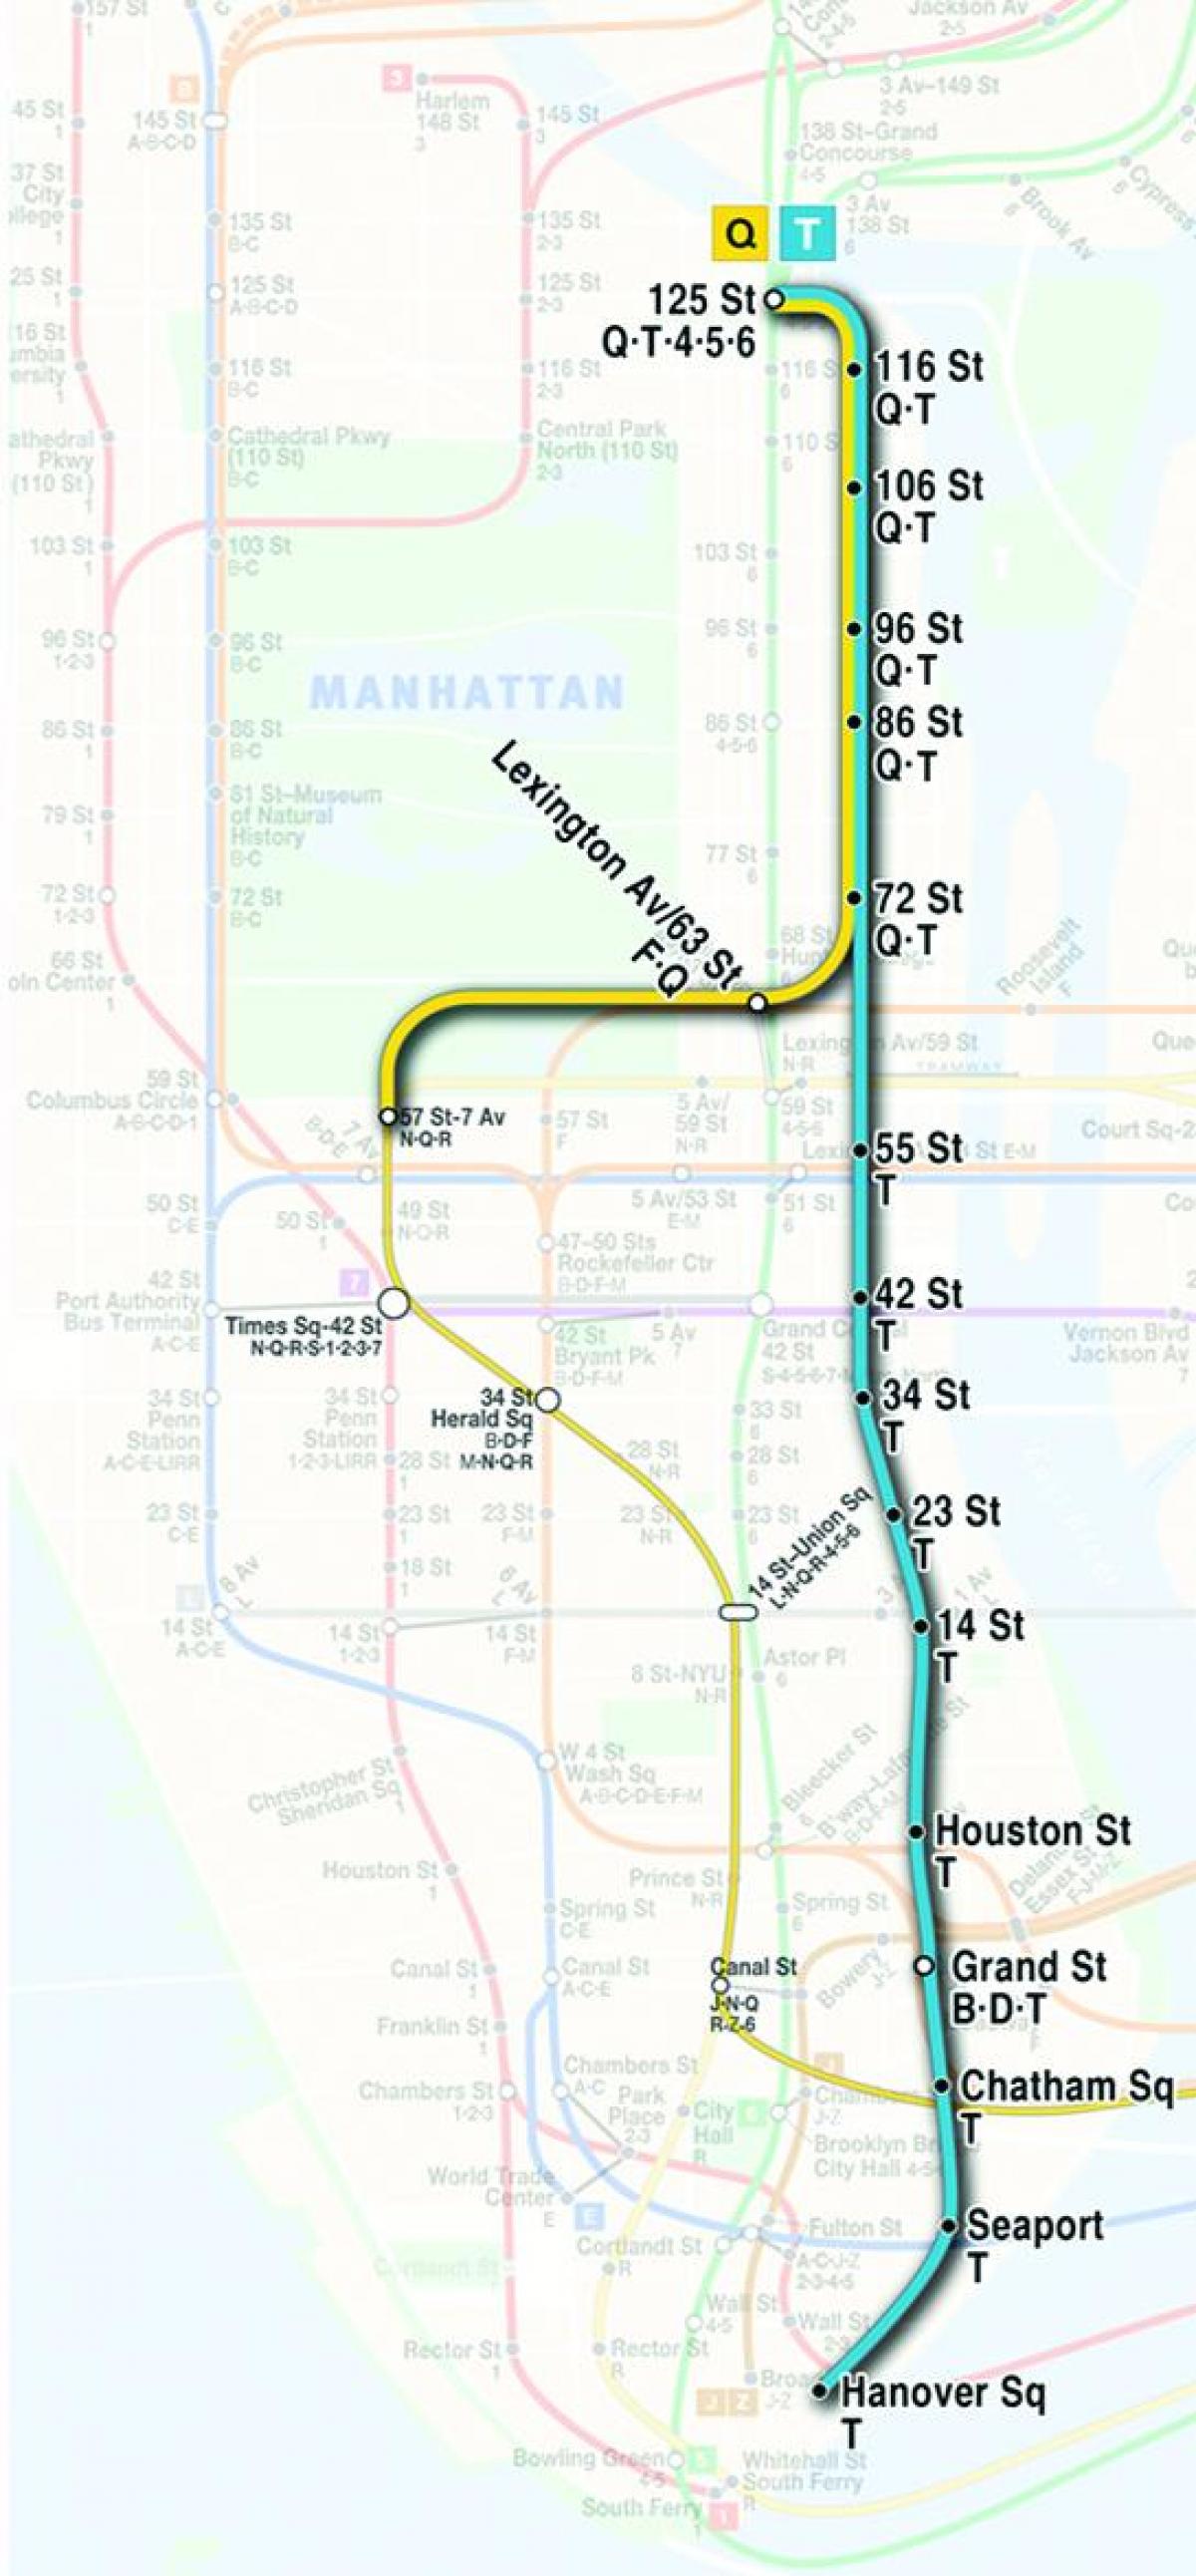 karta över second avenue subway